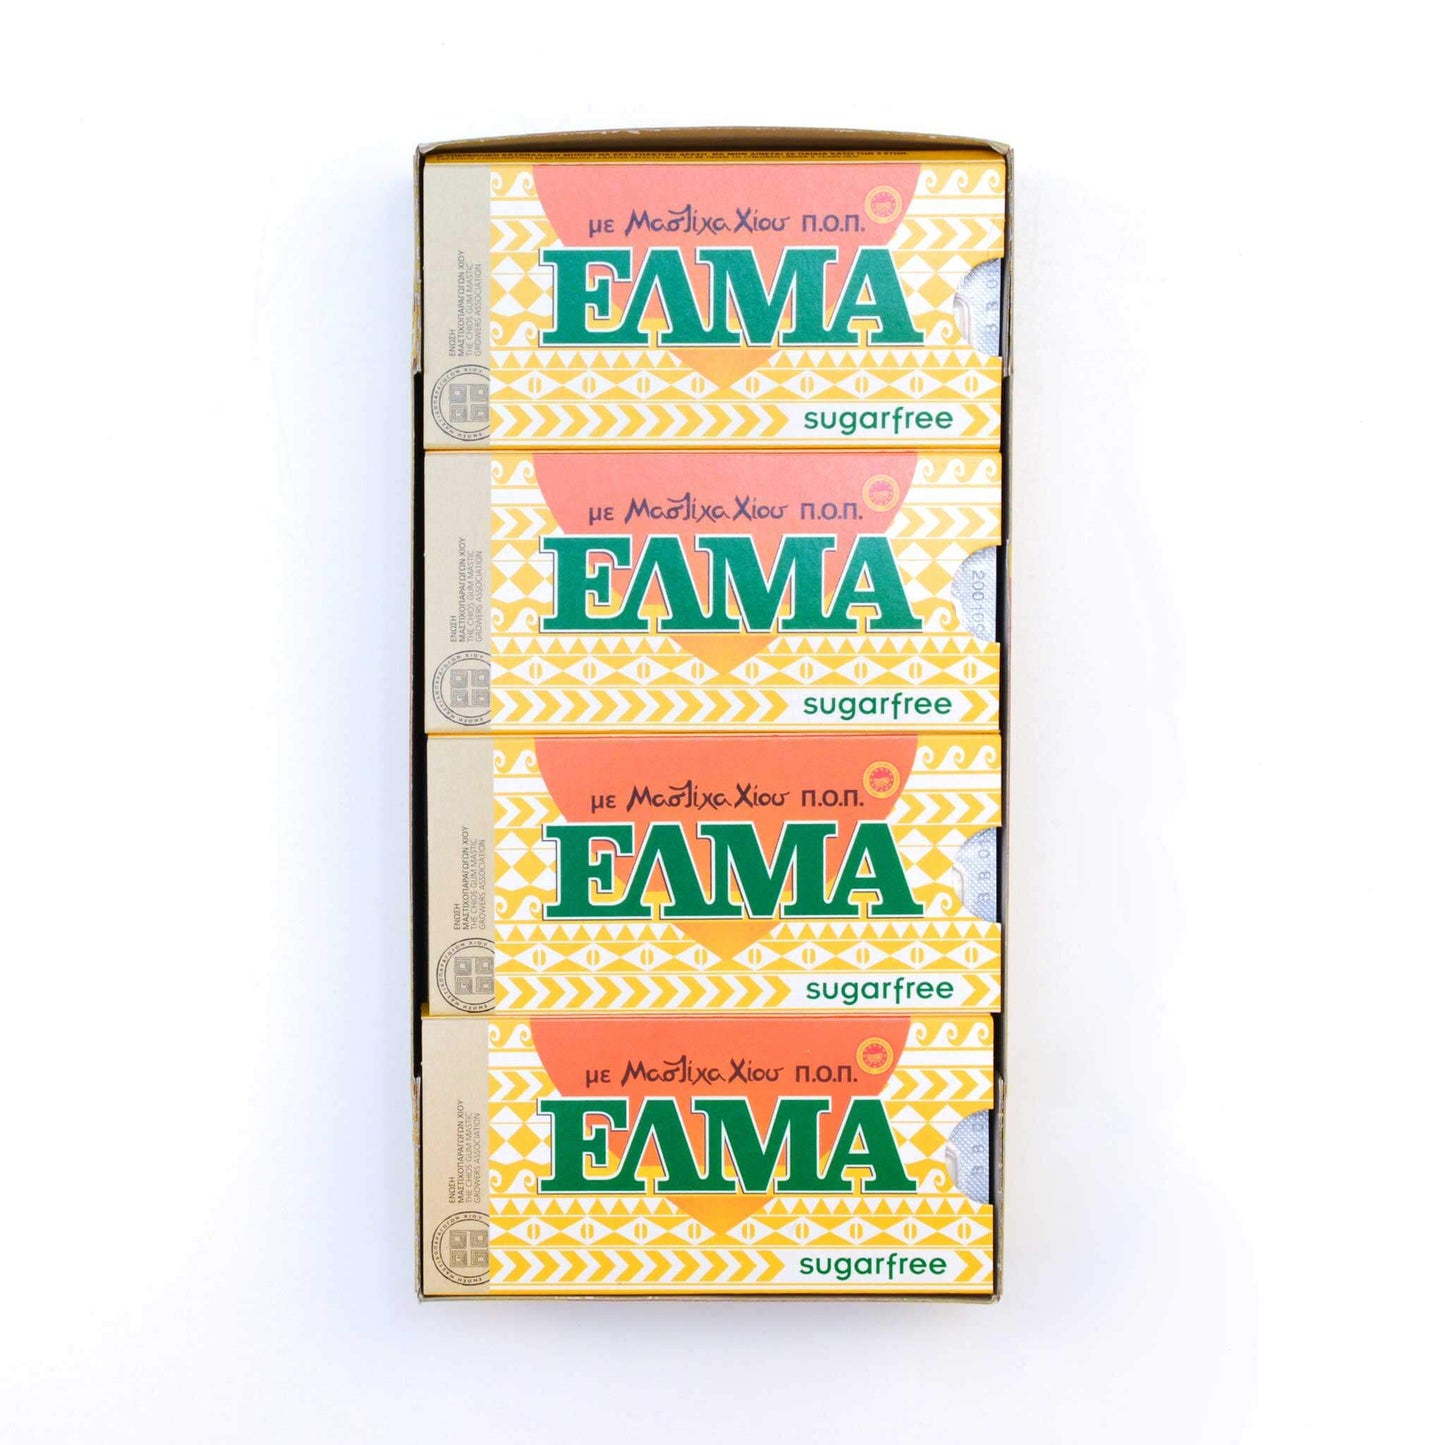 ELMA Sugarfree - ELMA Žvýkačky bez cukru s mastichou